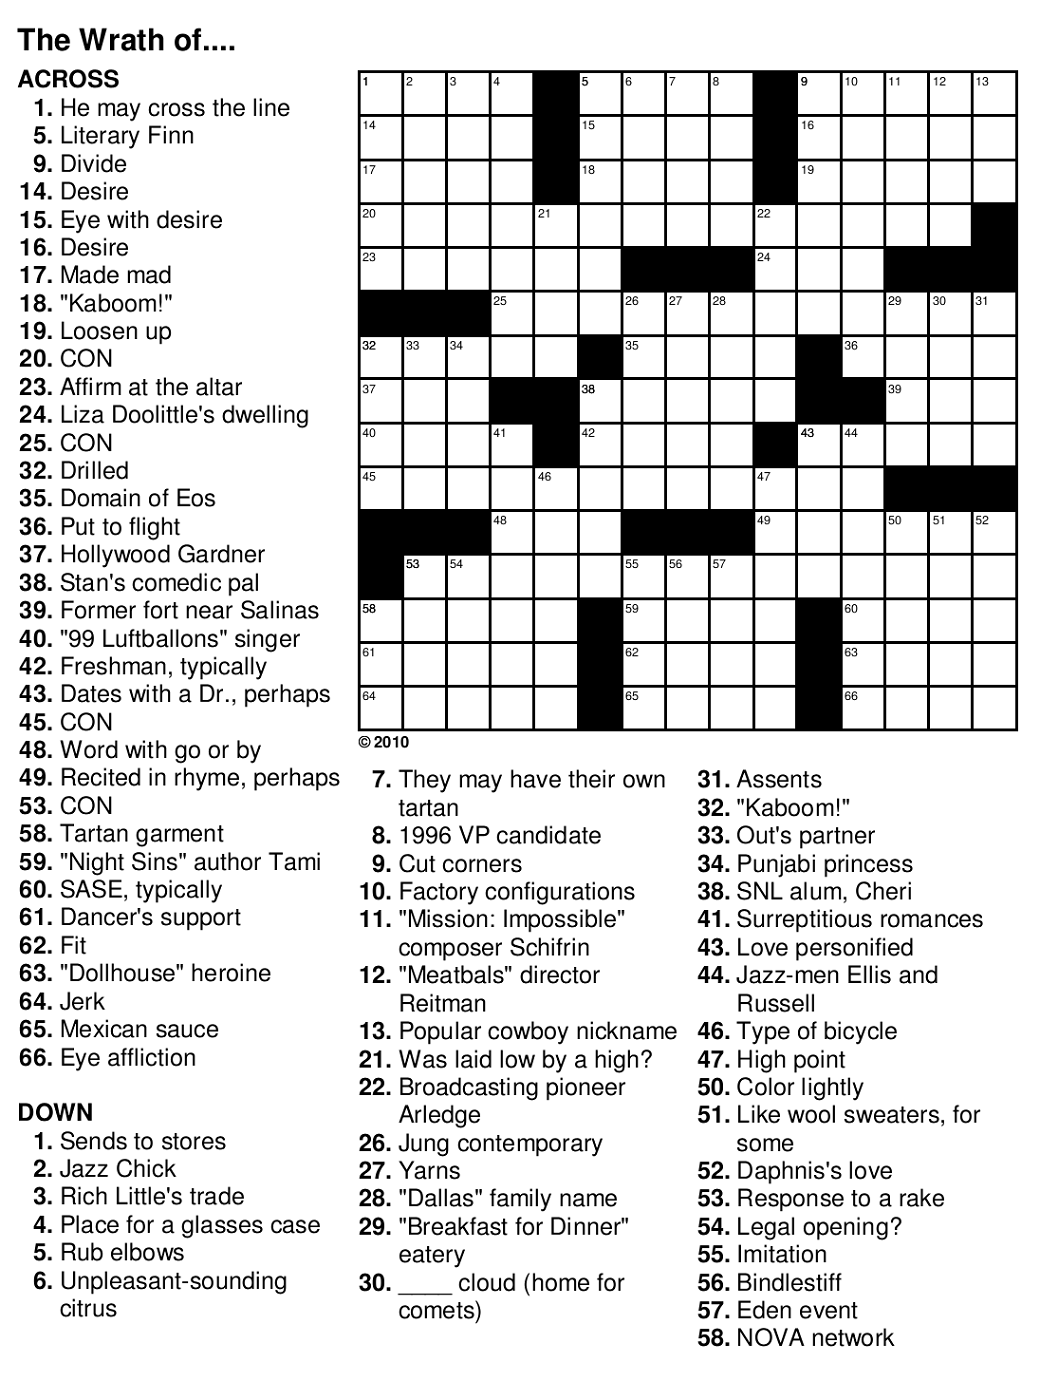 Easy Crossword Puzzles For Seniors Activity Shelter - Easy Crossword Puzzles 96